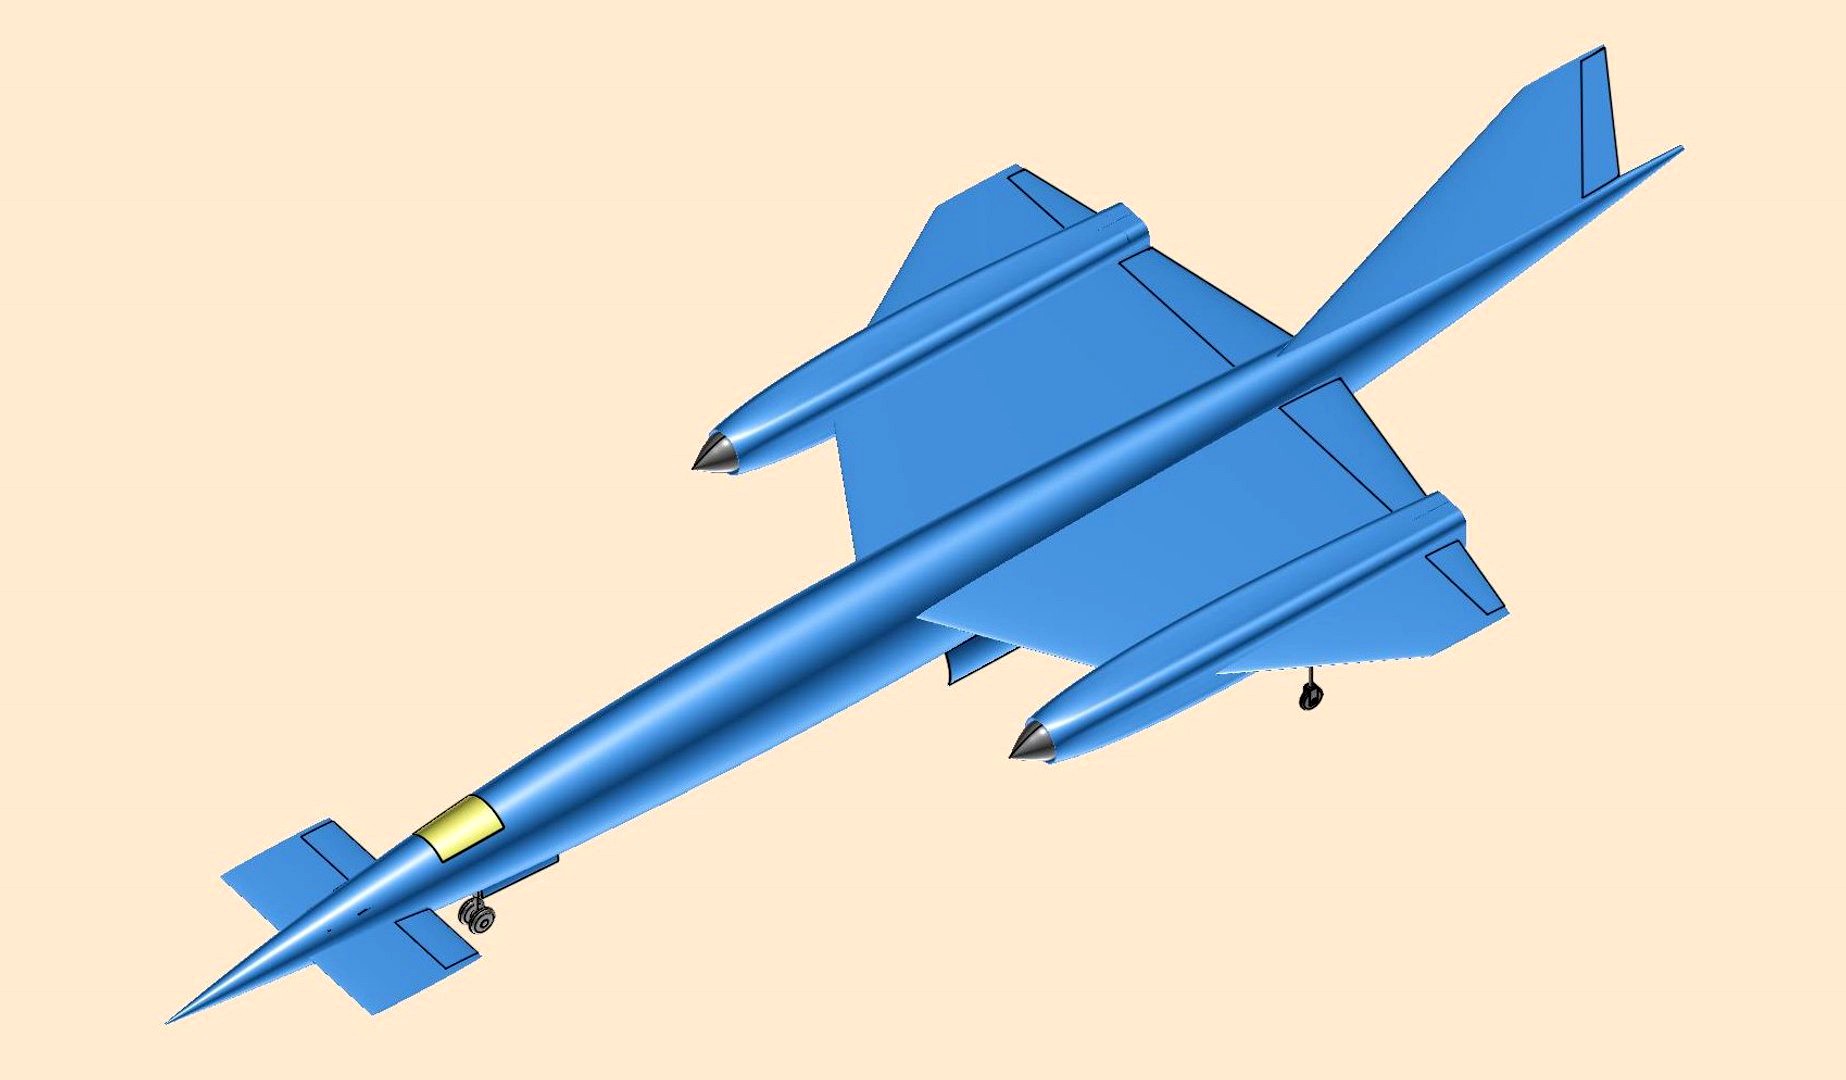 Avro 730 Mach 3 Recon Aircraft Conceptual Design